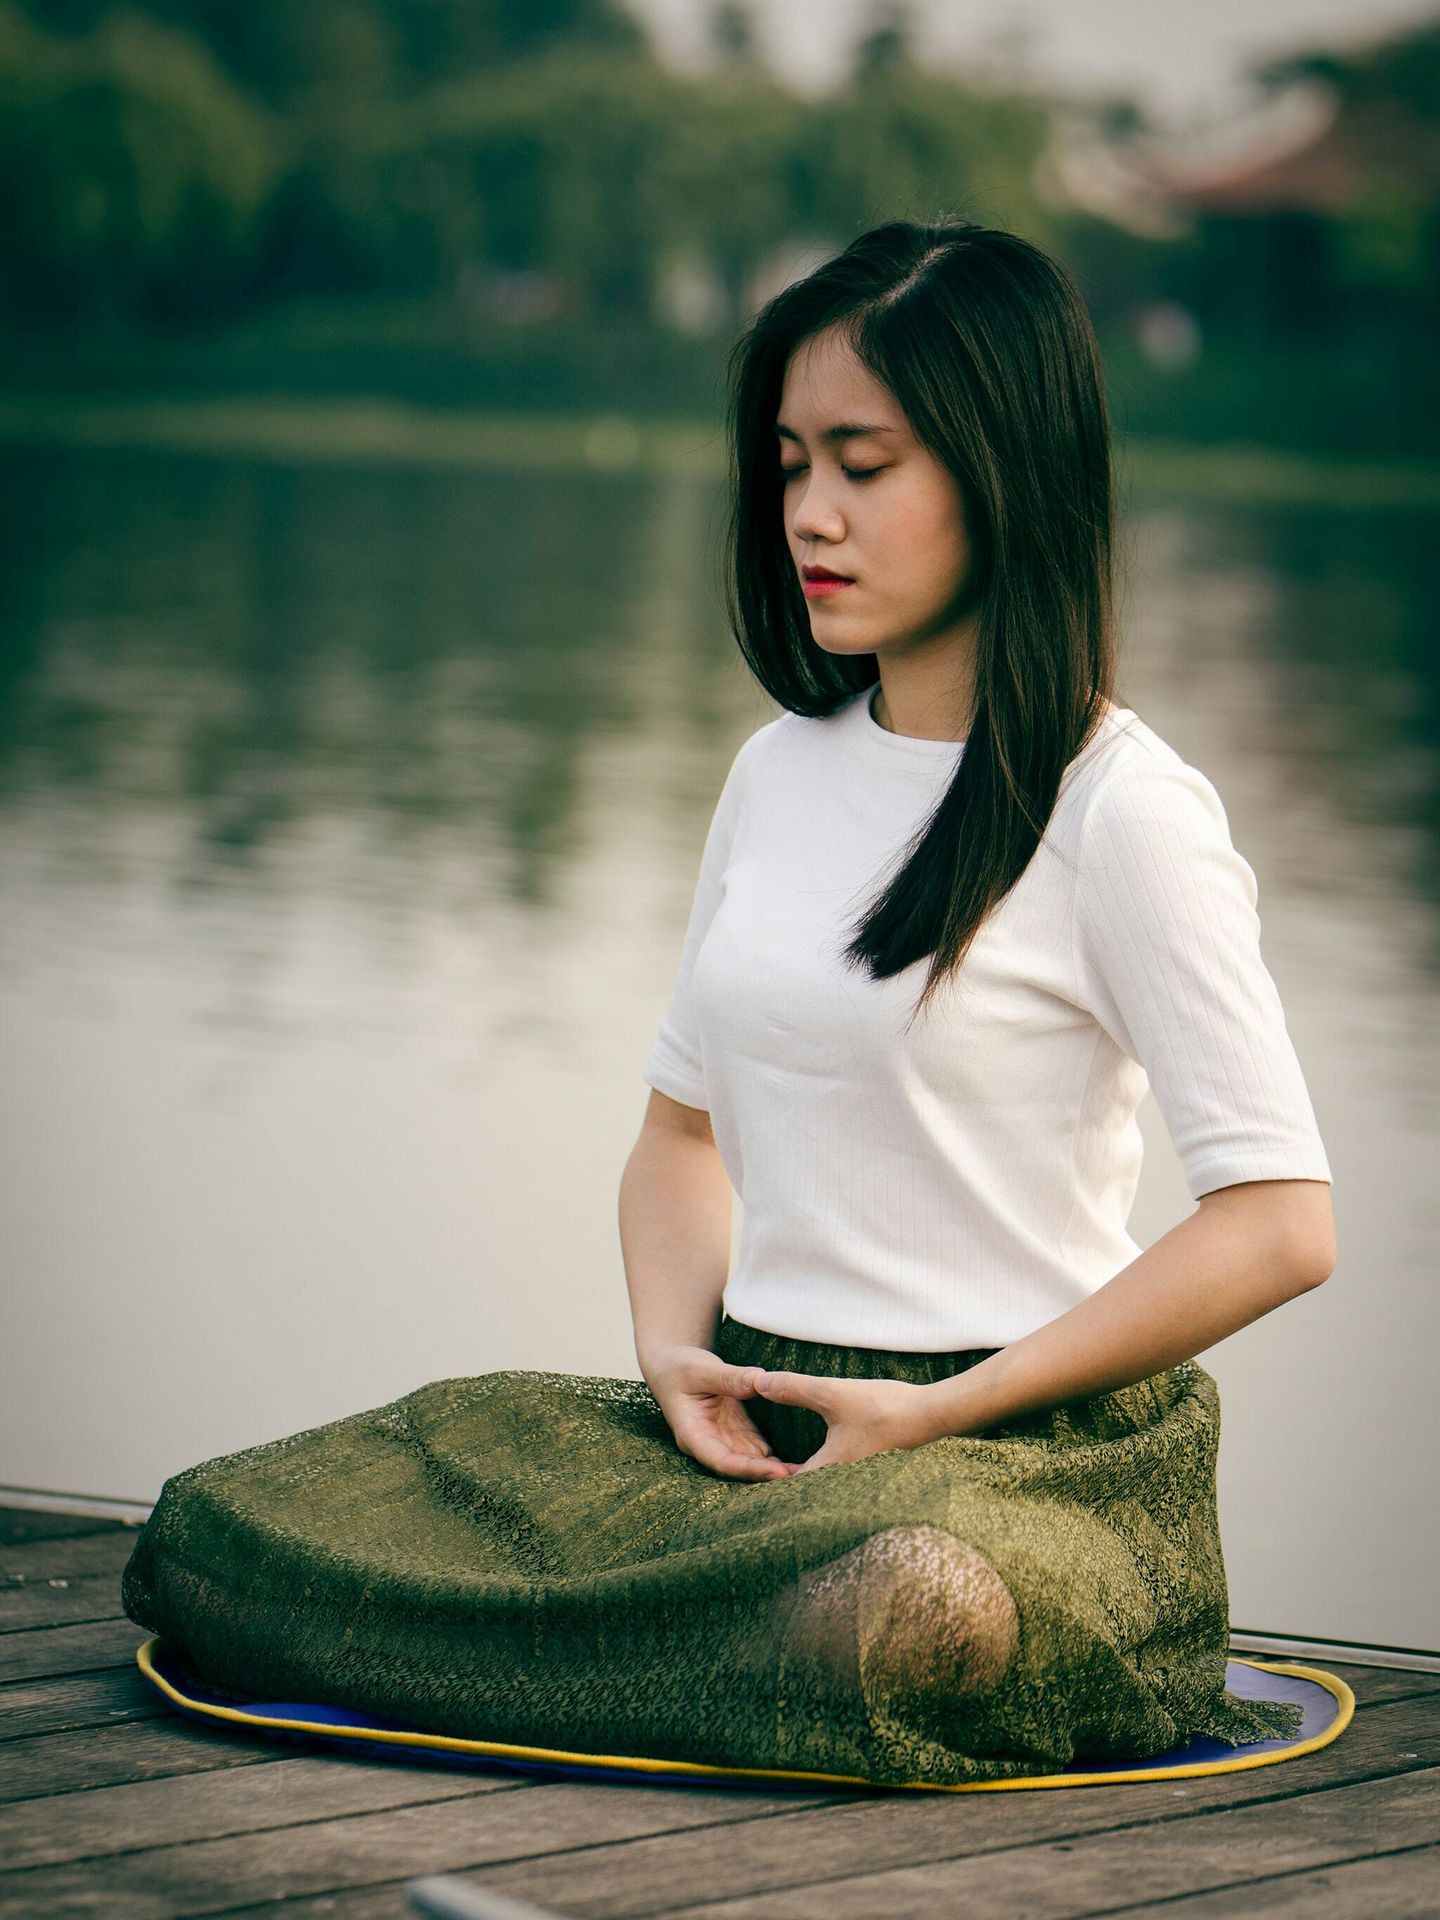 Meditación guiada por expertos, ideal para principiantes. (Le Minh Phuong para Unsplash)